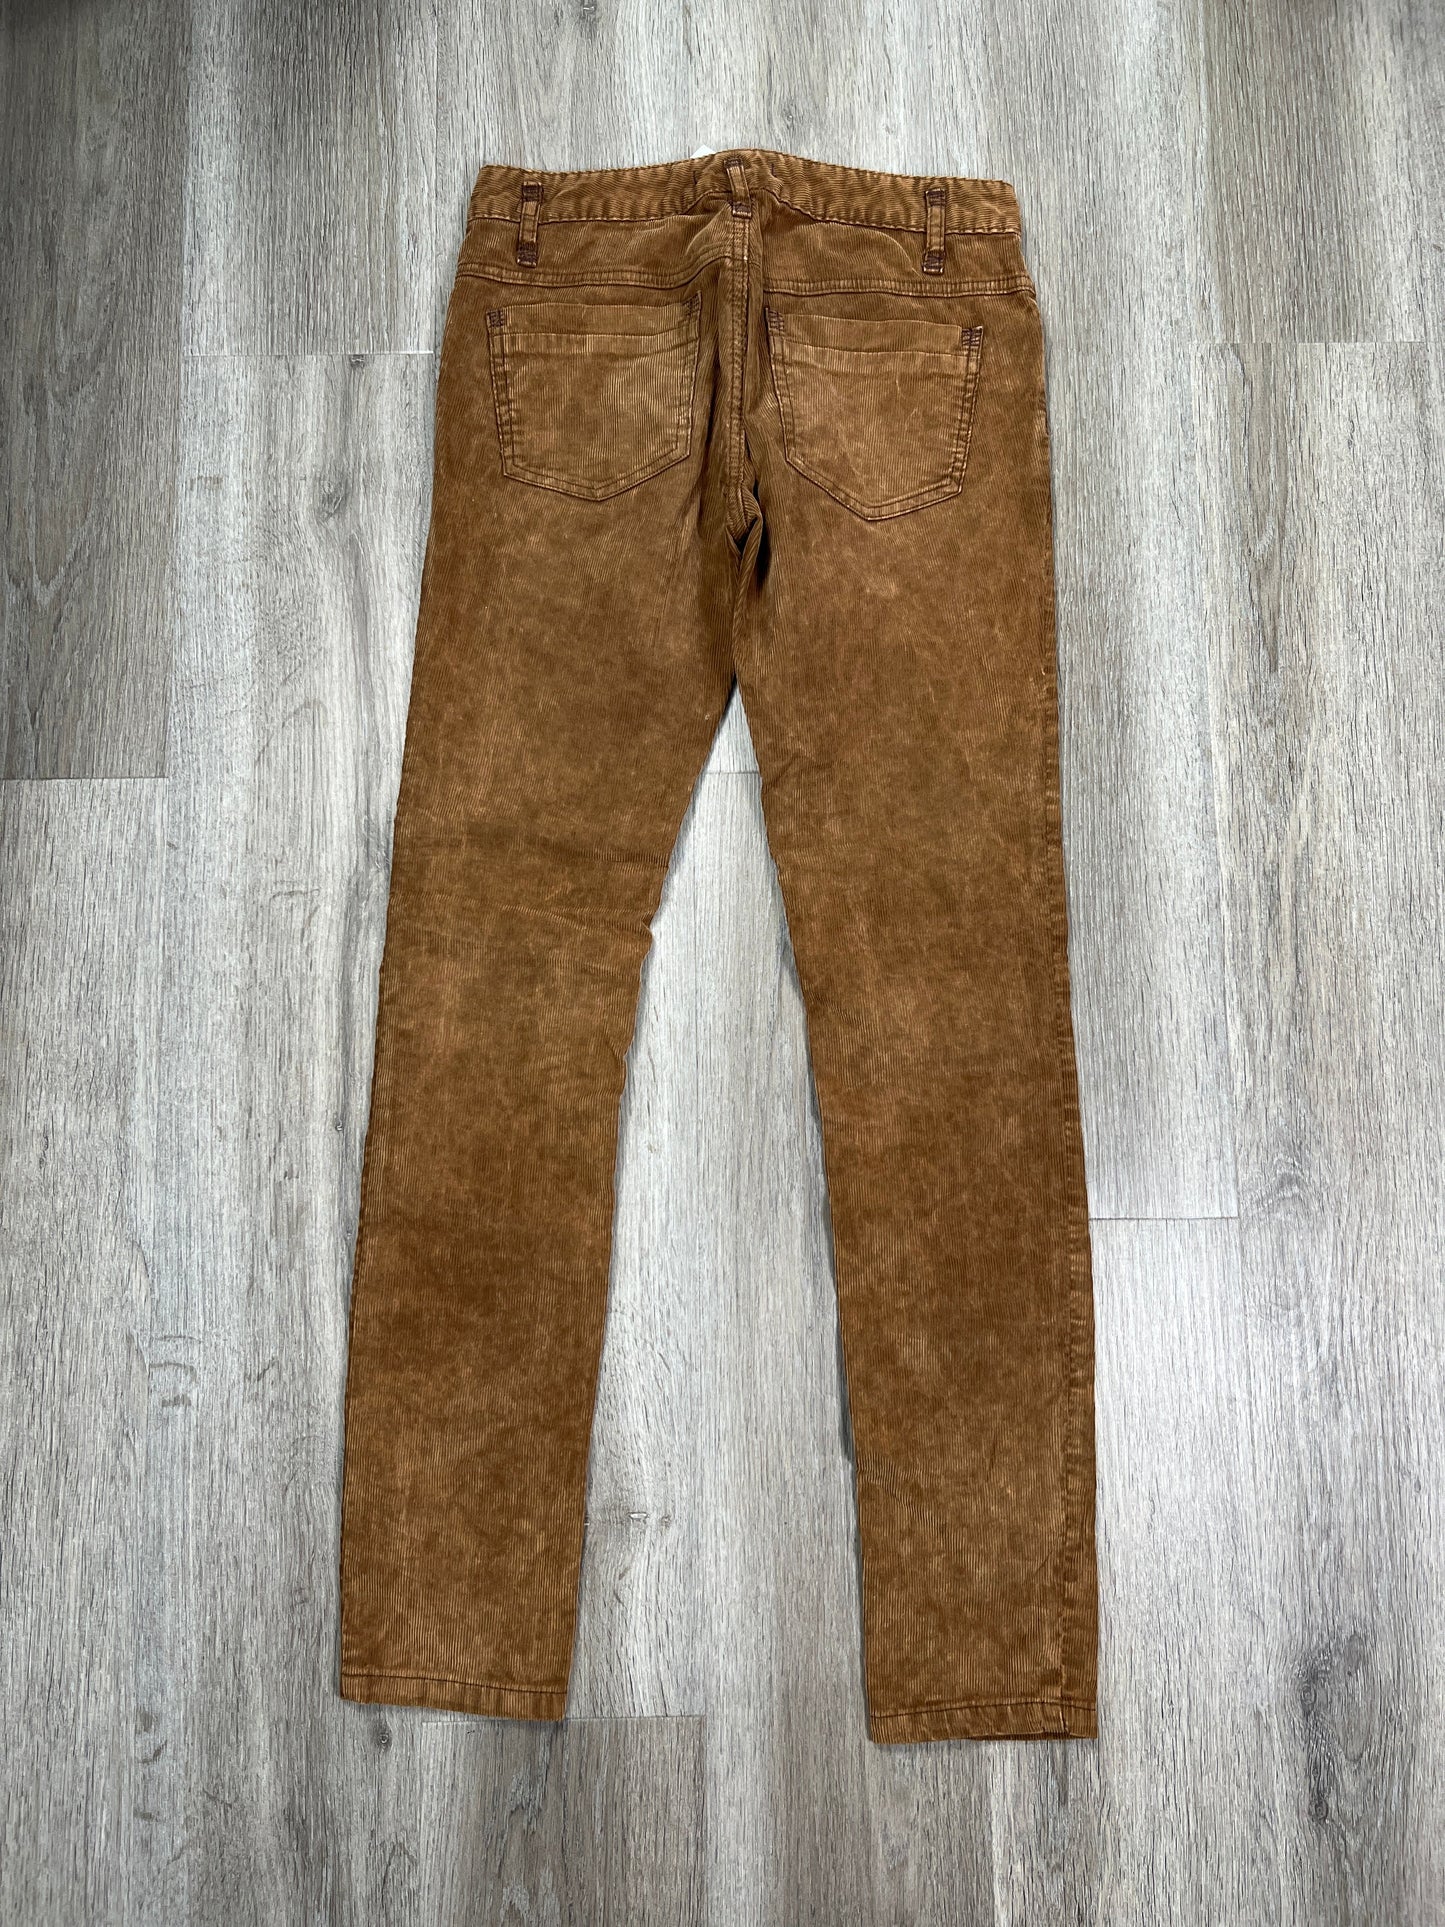 Brown Pants Corduroy Free People, Size 6